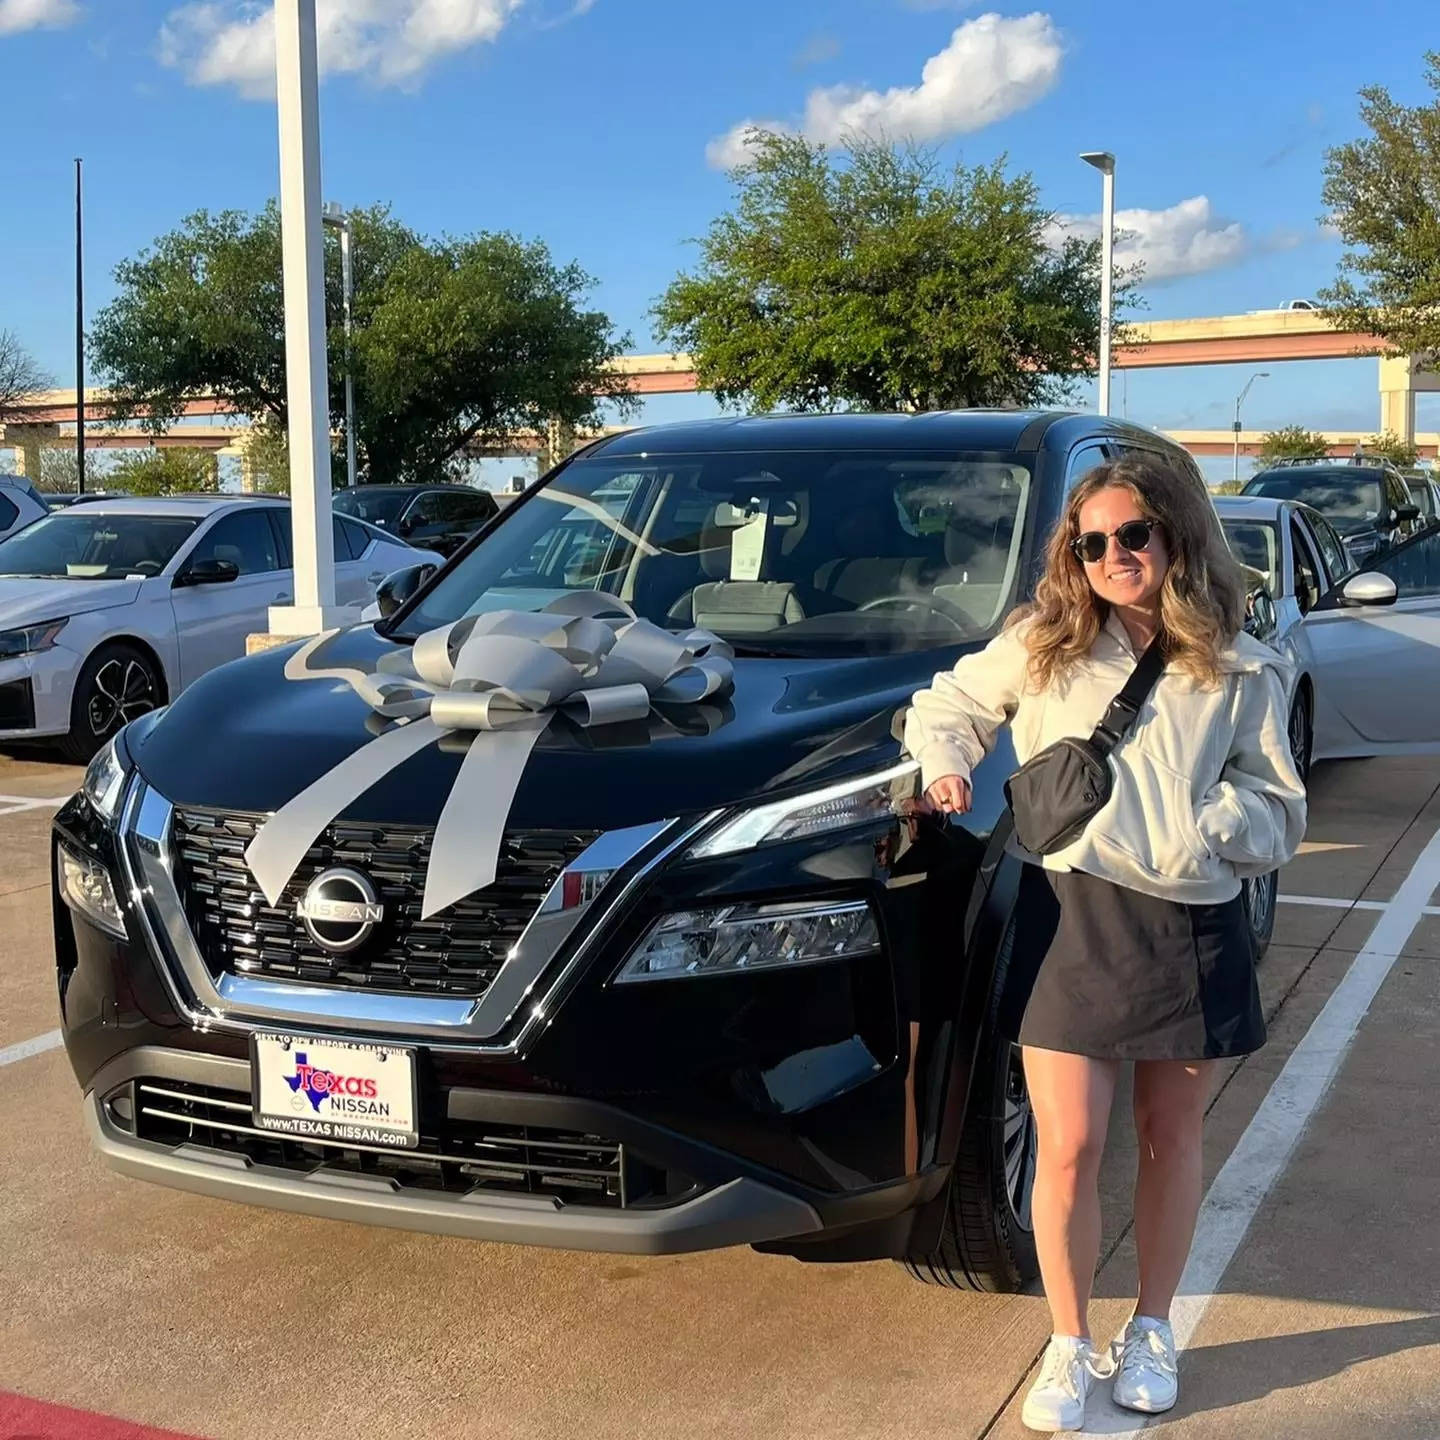 Rachel Volk standing next to a black Nissan car.